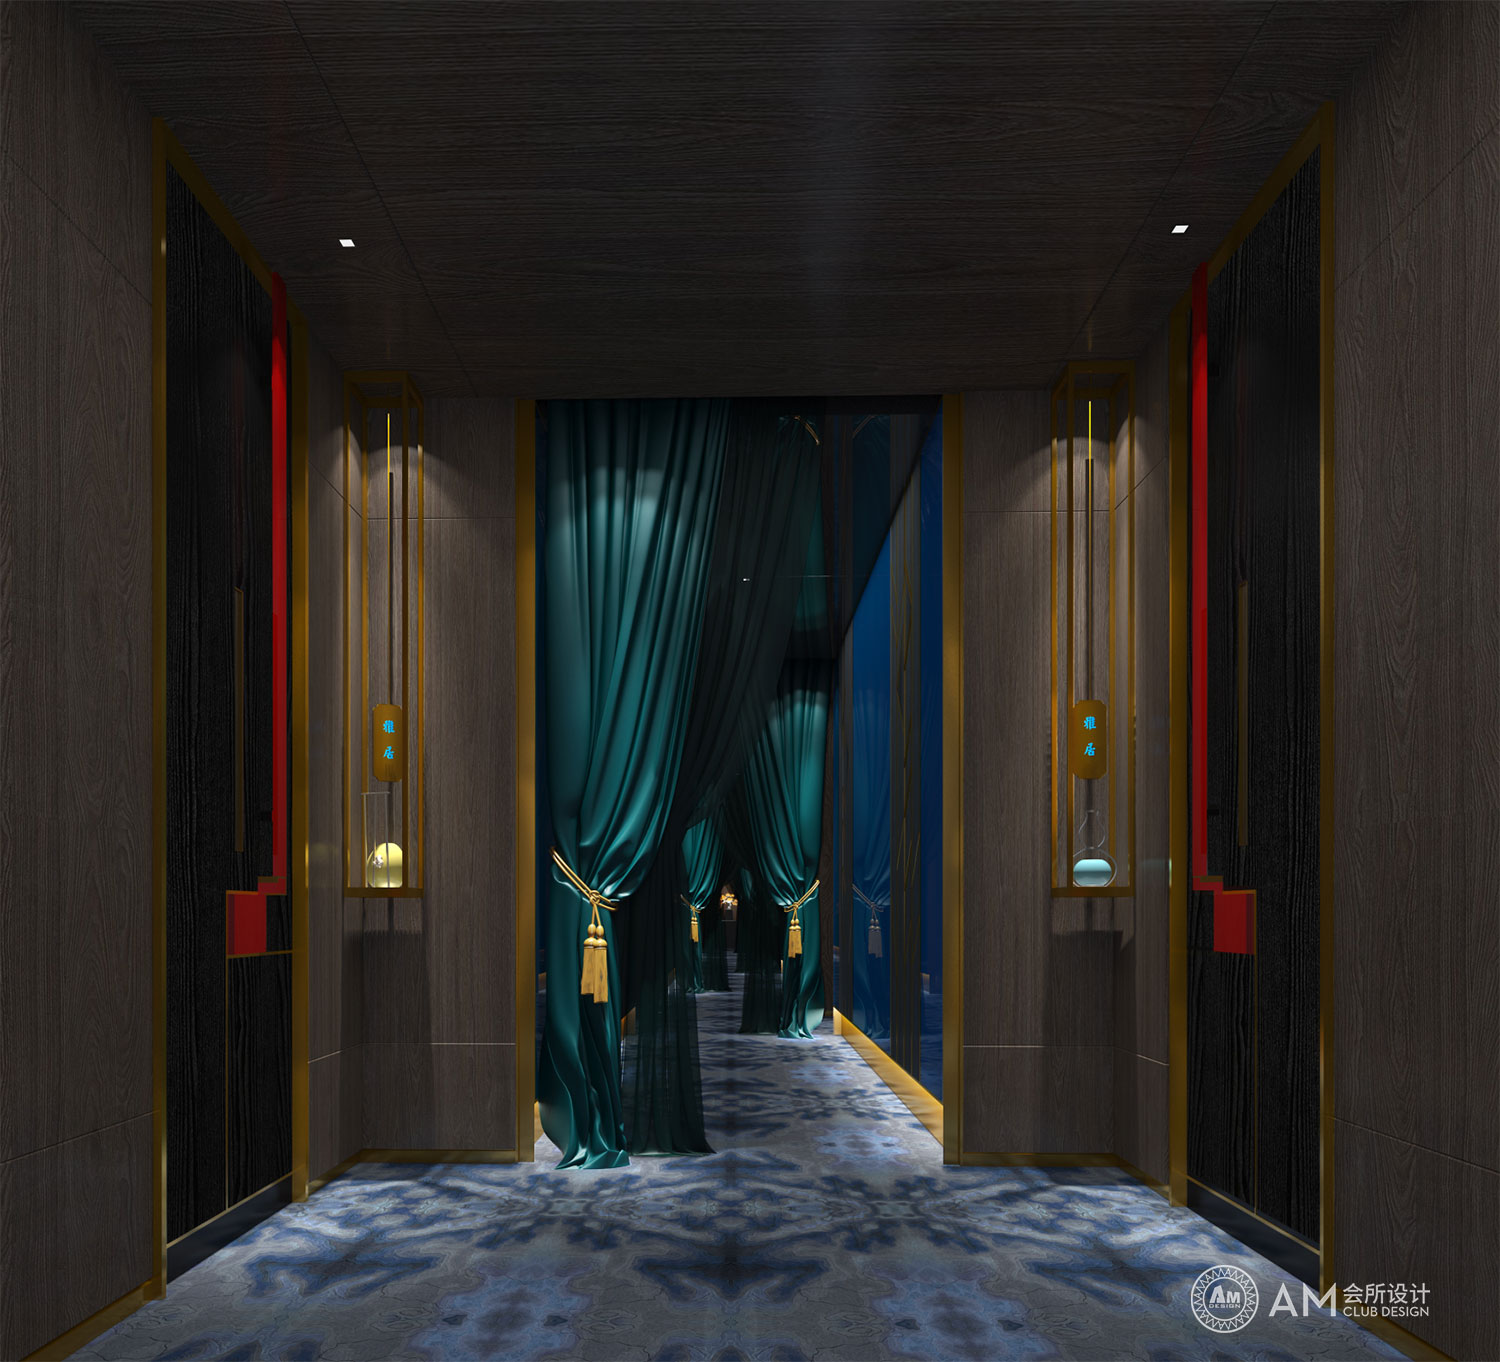 AM DESIGN | Design of Jiugongge Spa Club corridor